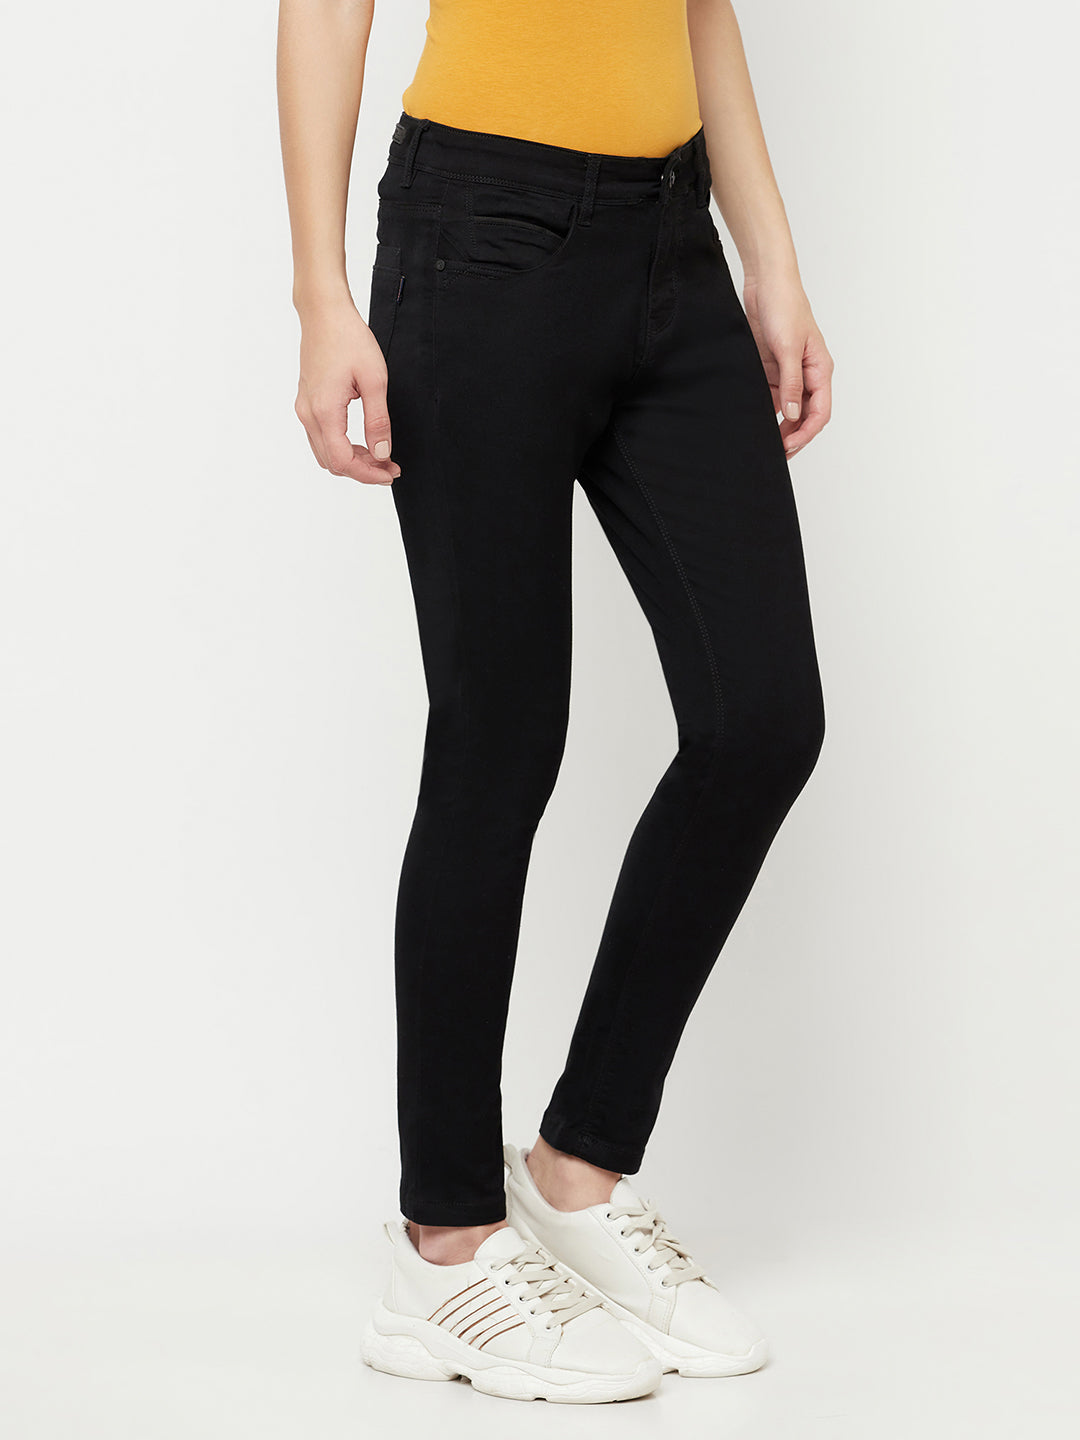 Black Ankle Length Jeans - Women Jeans